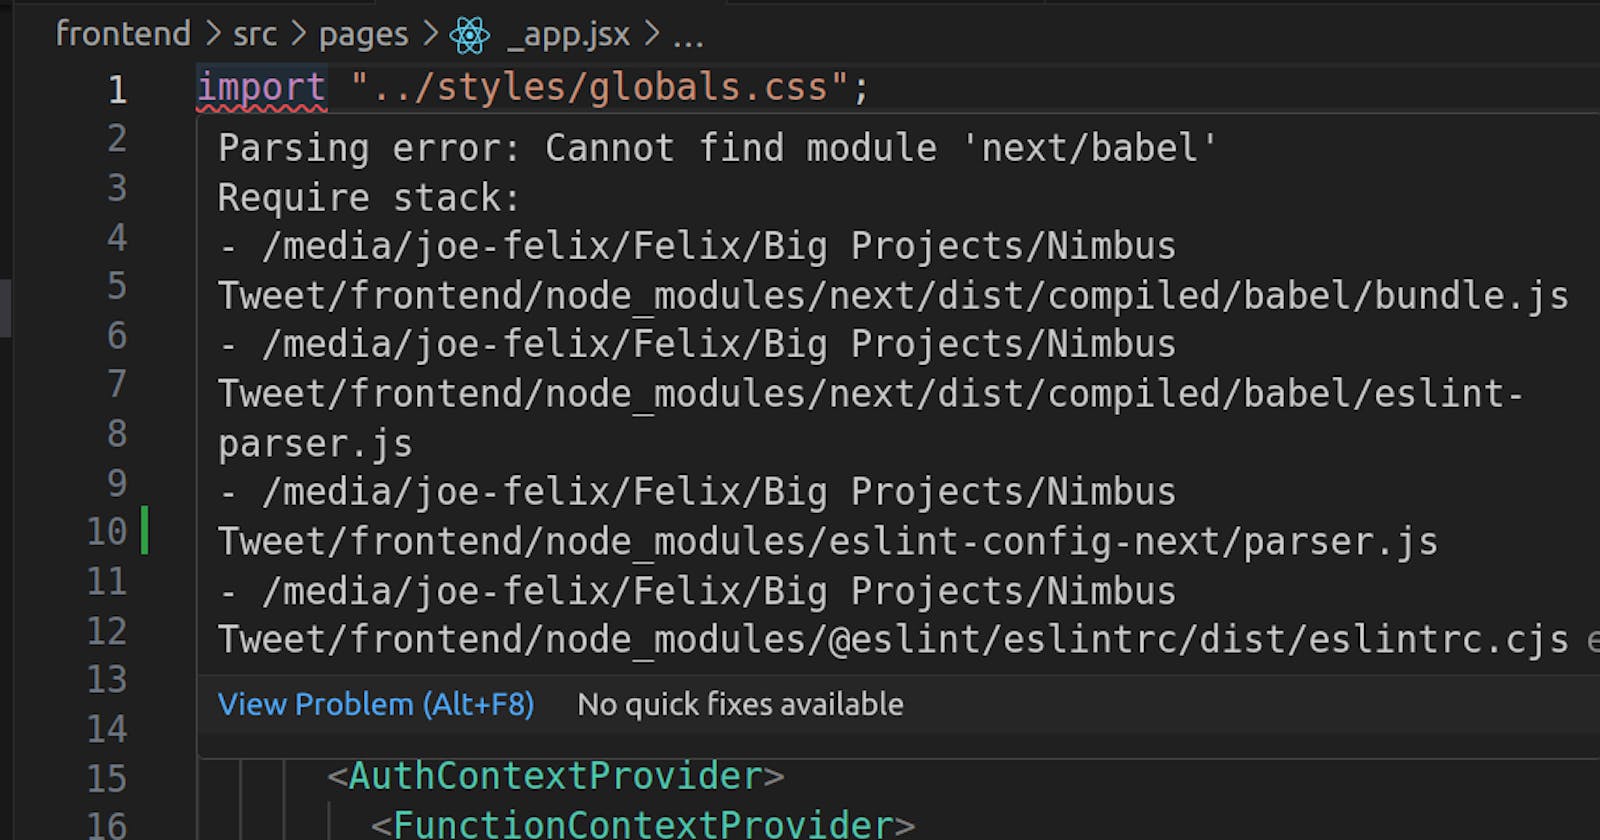 Parsing error: Cannot find module 'next/babel' in Next